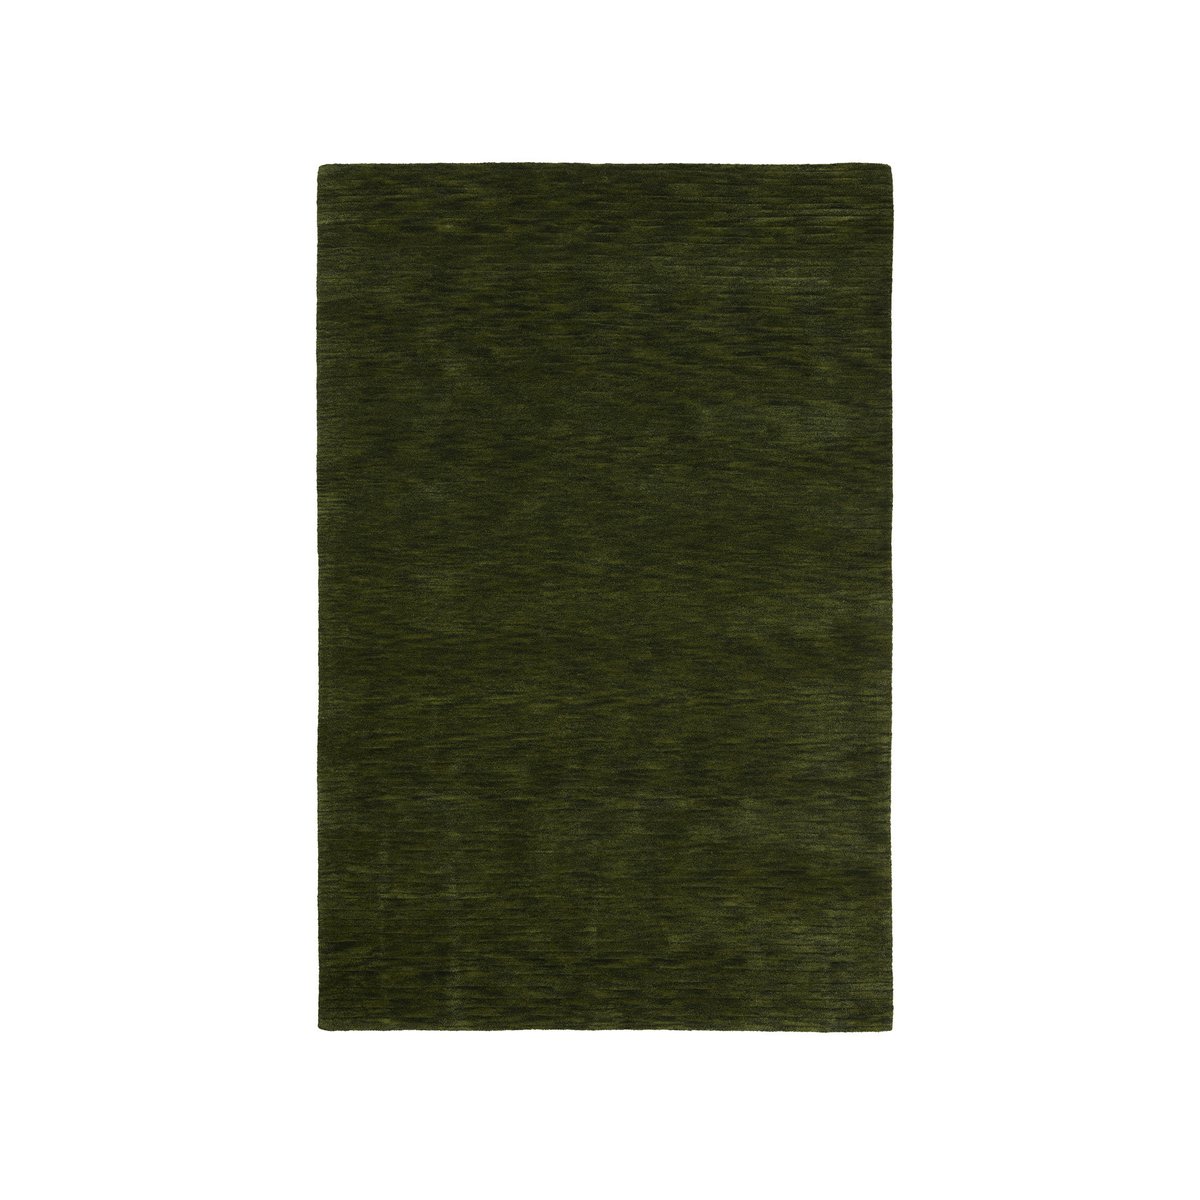 Chhatwal & Jonsson Karma Vloerkleed green melange, 180x270 cm